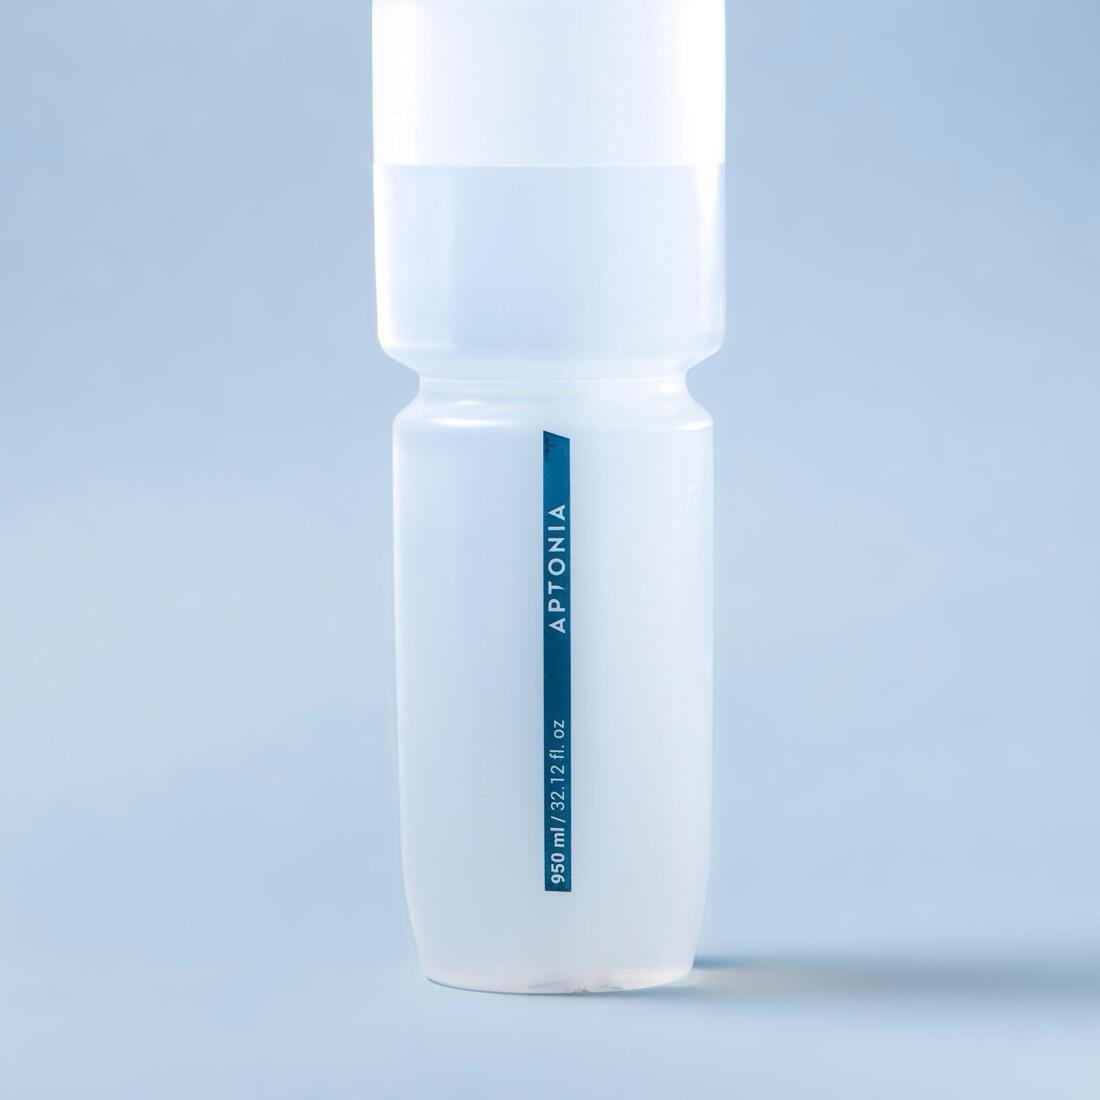 DECATHLON - Sports Bottle 960 Ml, Blue